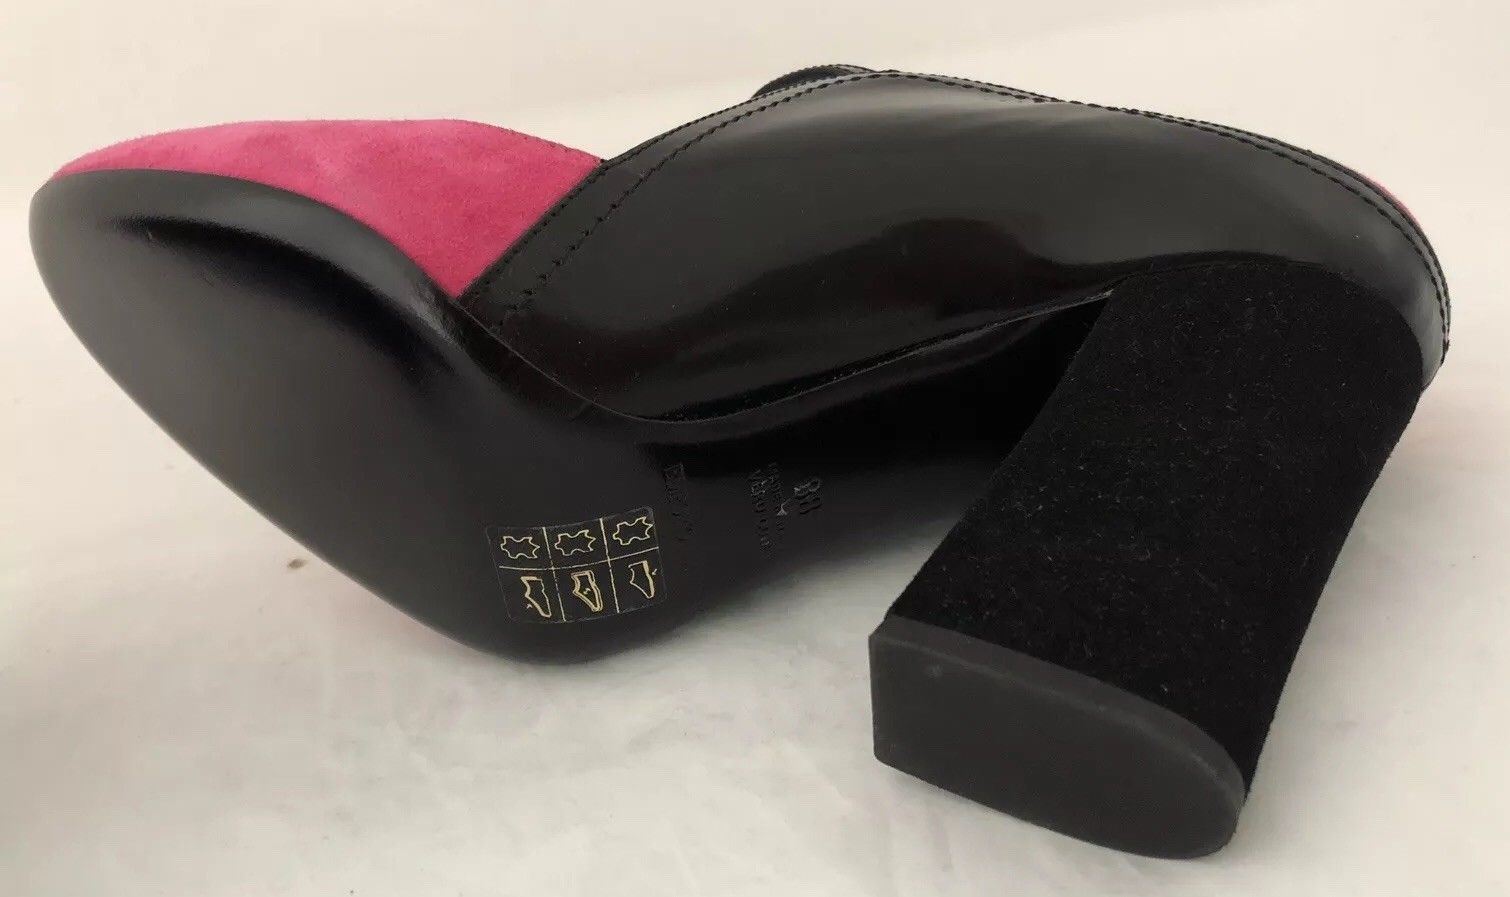 NIB $595 Emporio Armani Women's High Heel Suede Pink Dress Shoes 8 US X3E261 IT